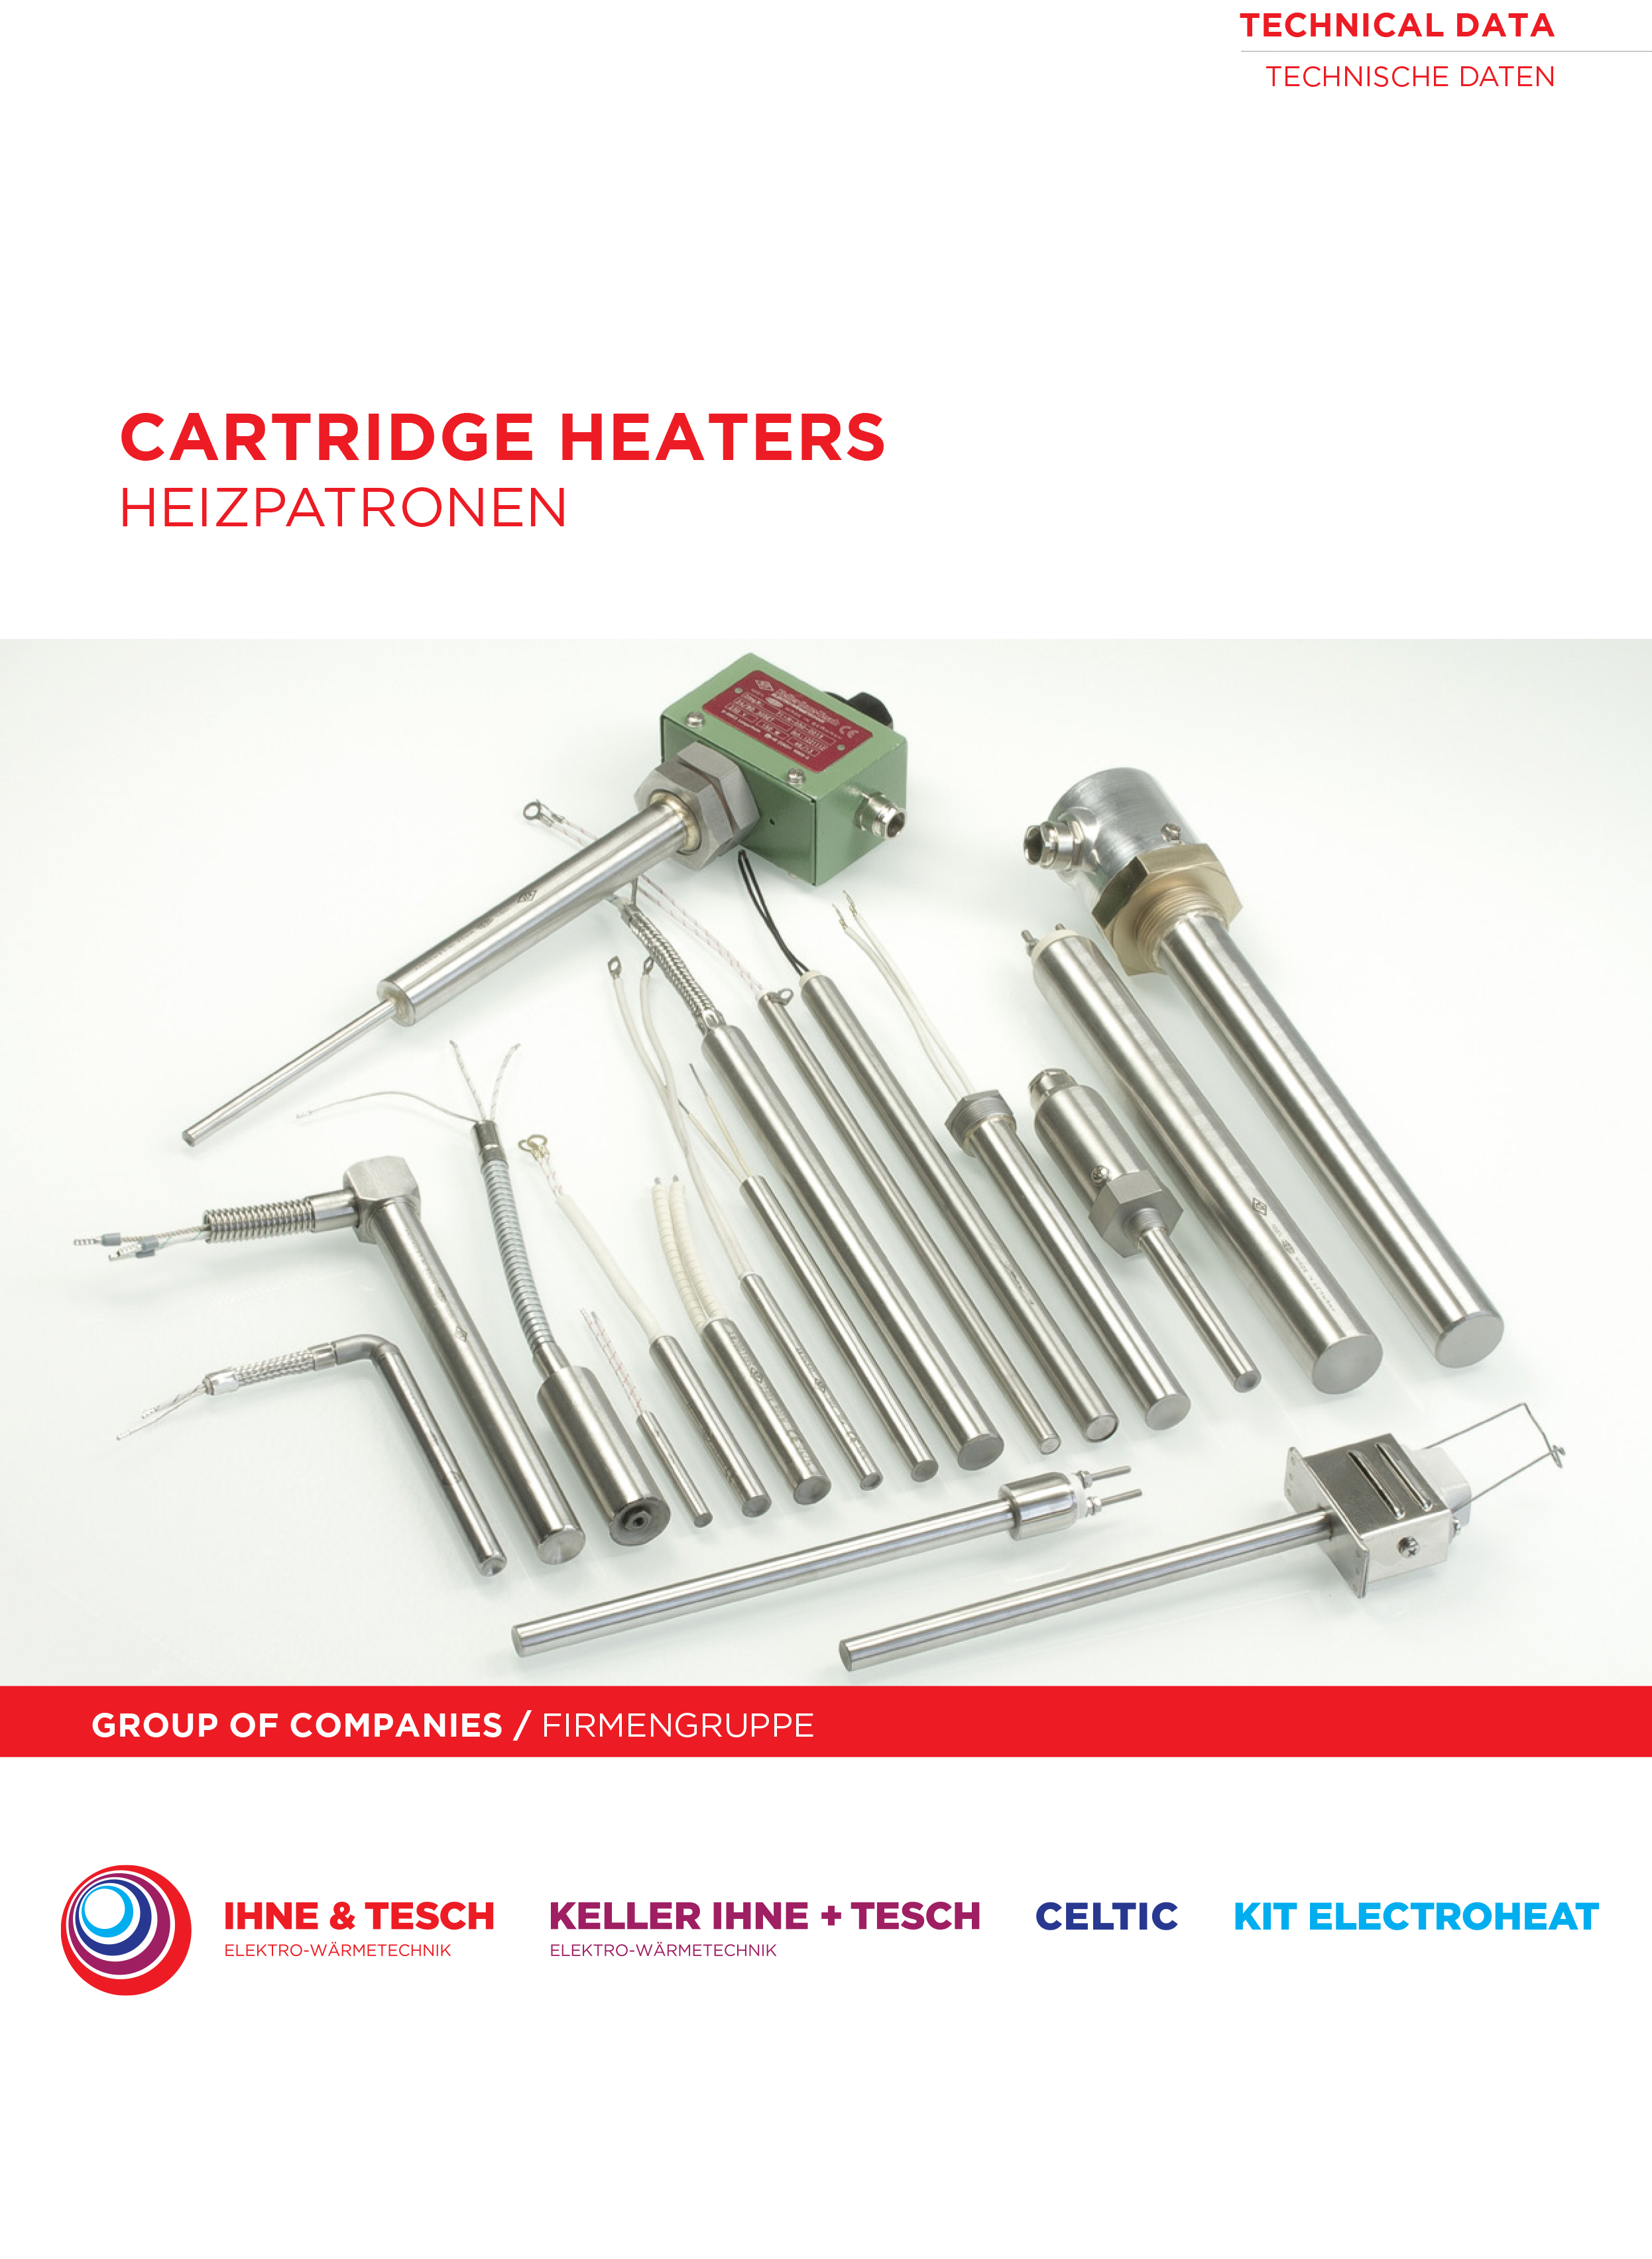 Cartridge-Heaters-technical-data